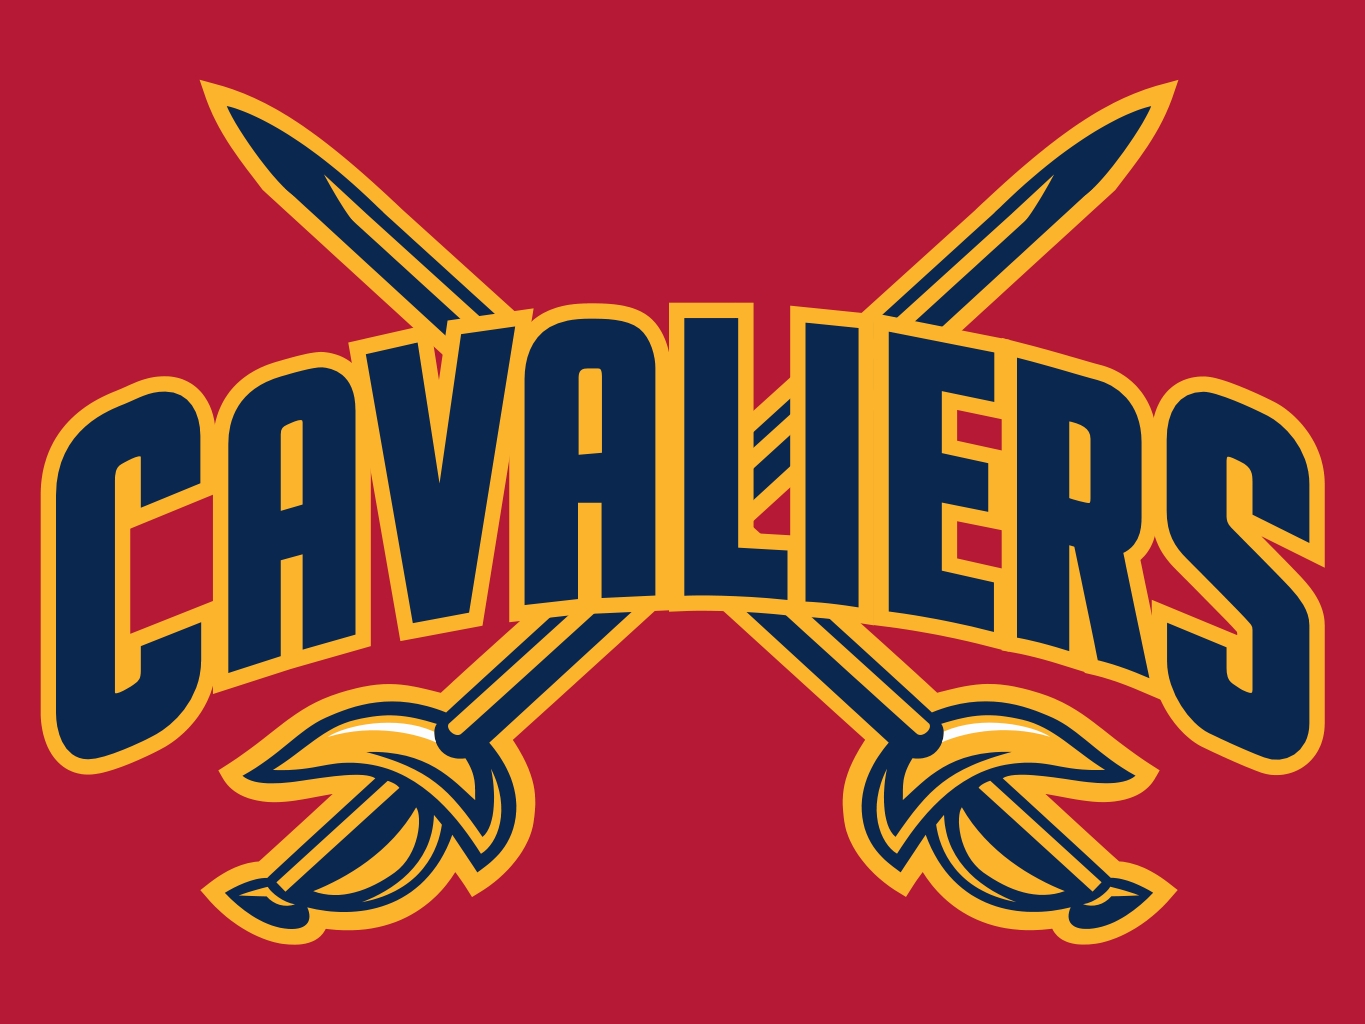 cavaliers logo wallpaper,font,text,logo,graphics,brand